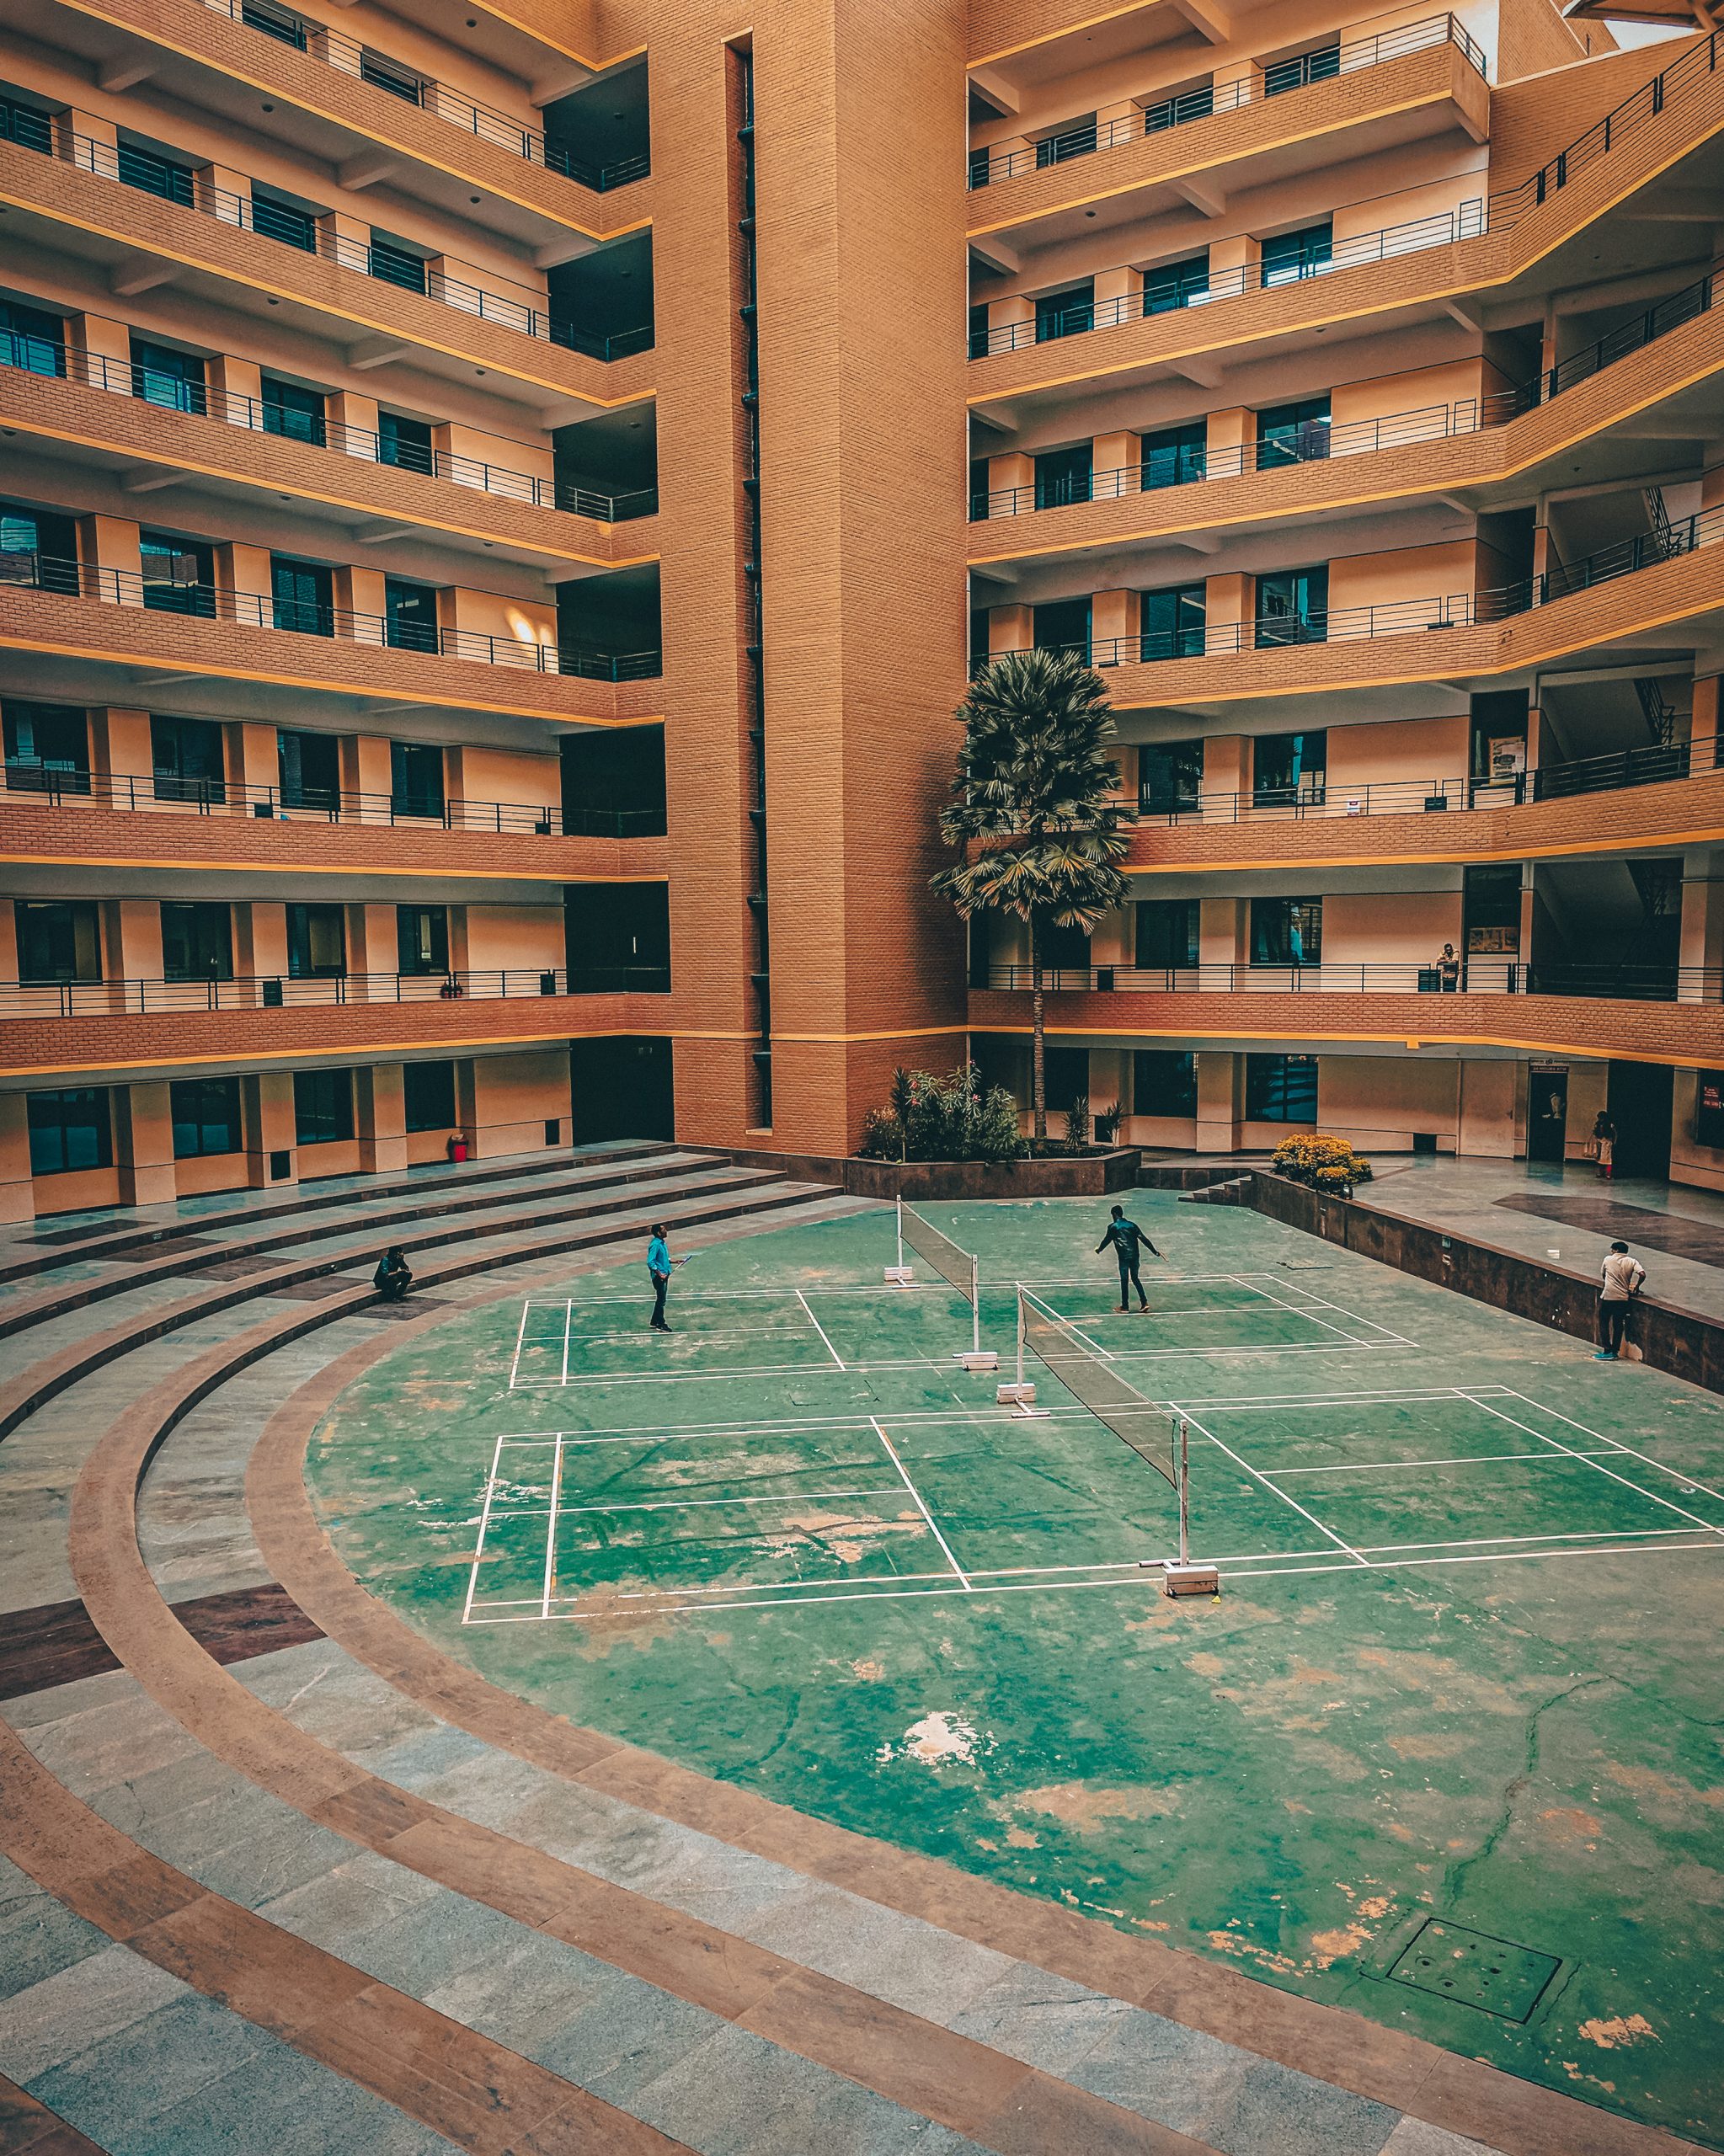 PES College Building in Bangalore